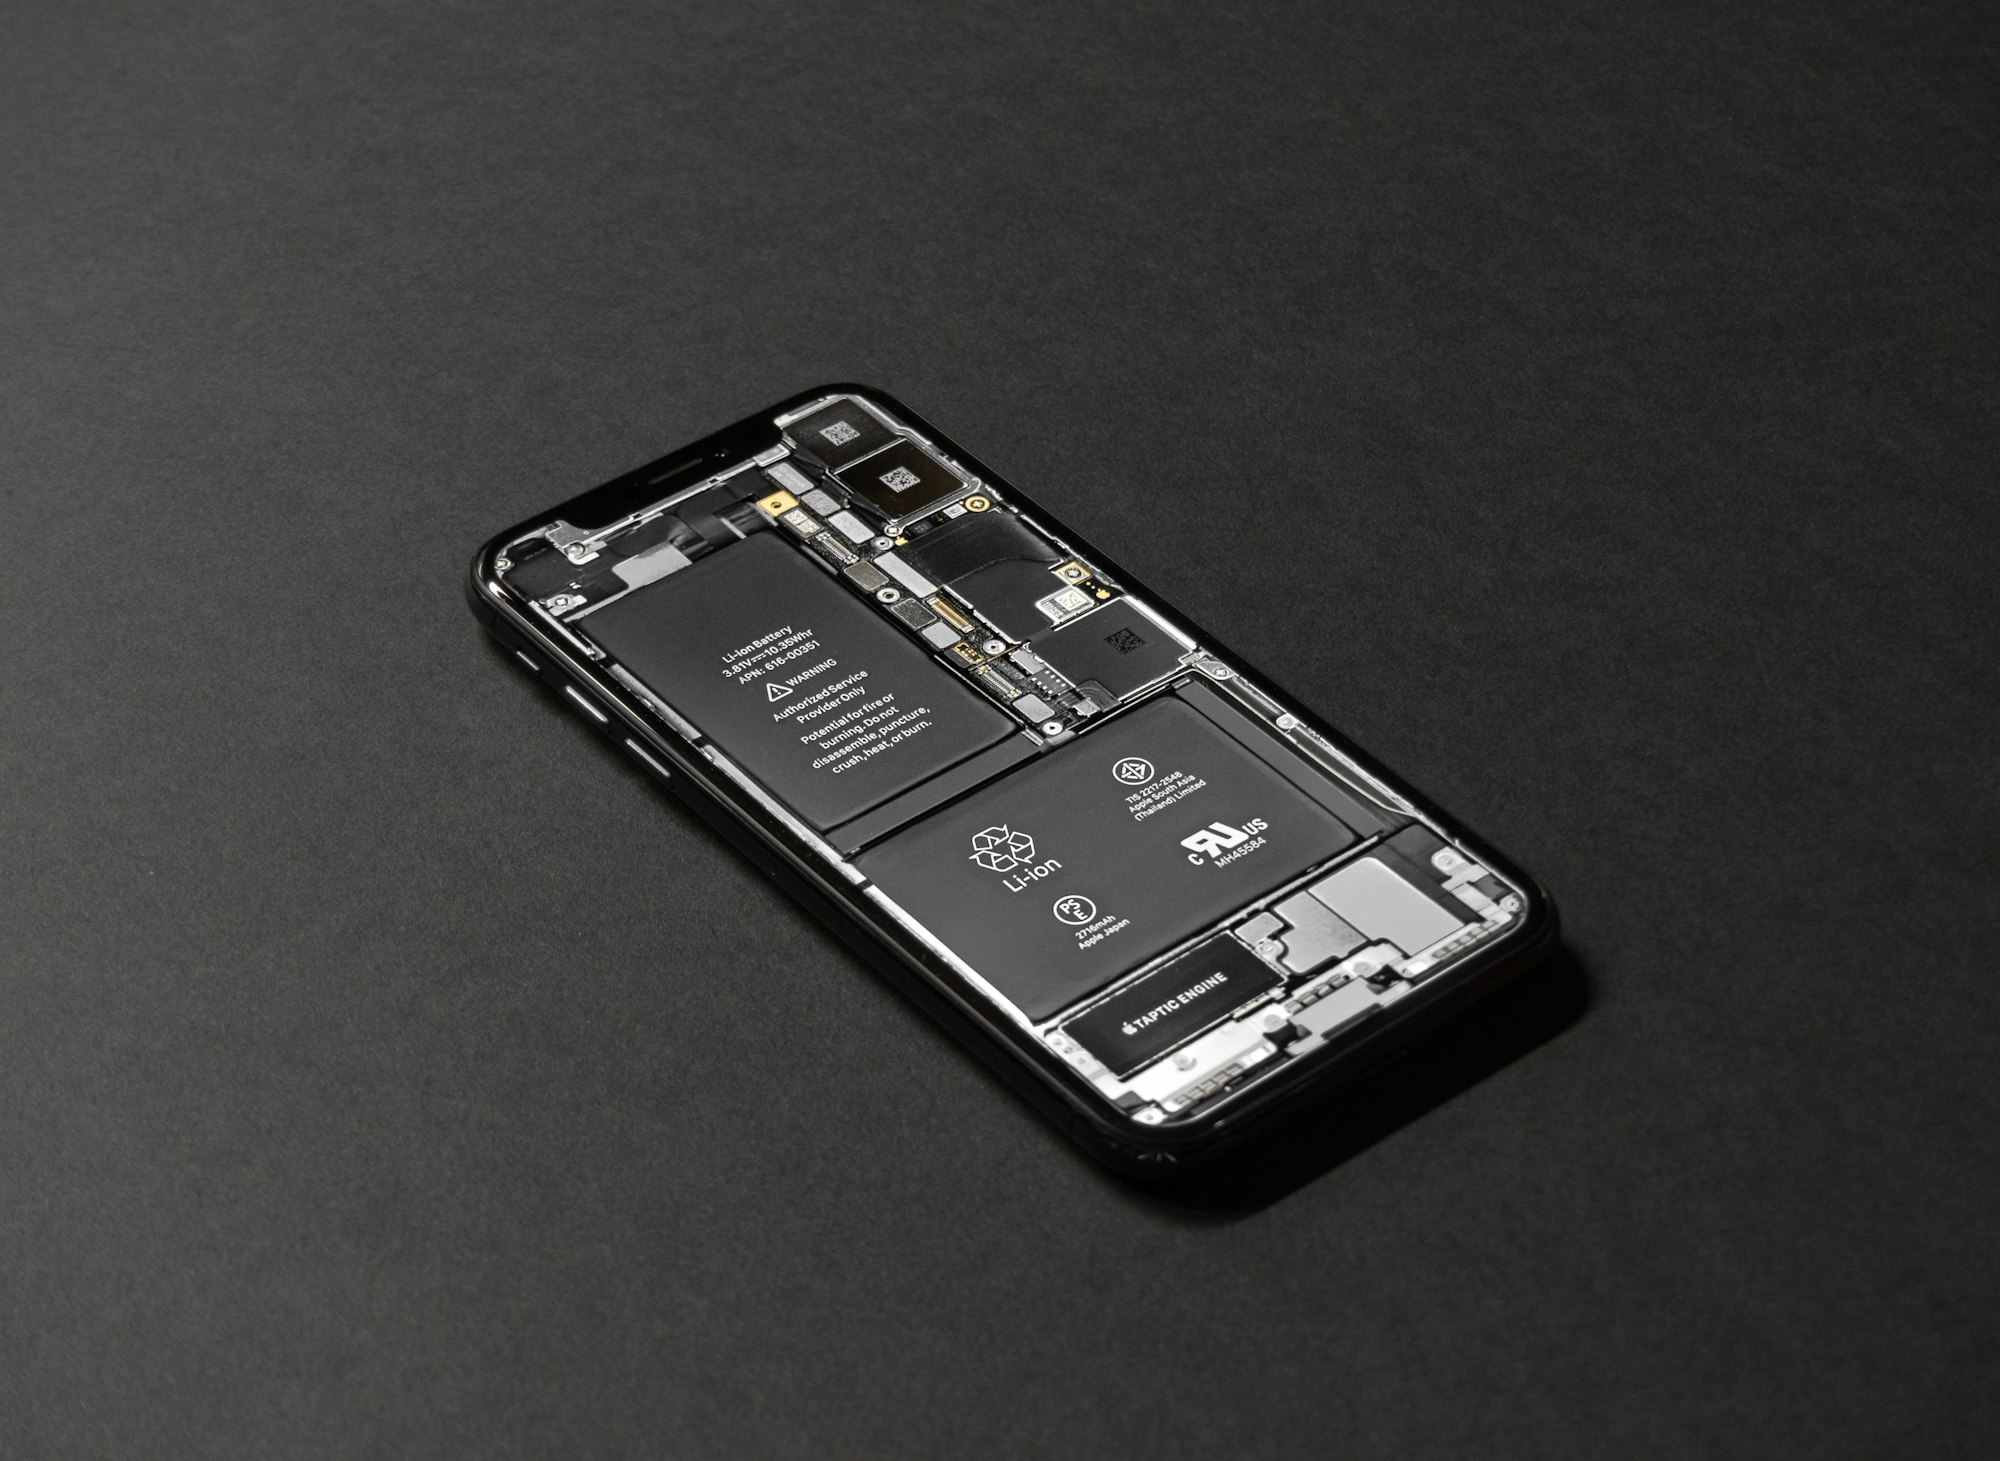 Apple interrompe a montagem do iPhone e iPad por falta de chips